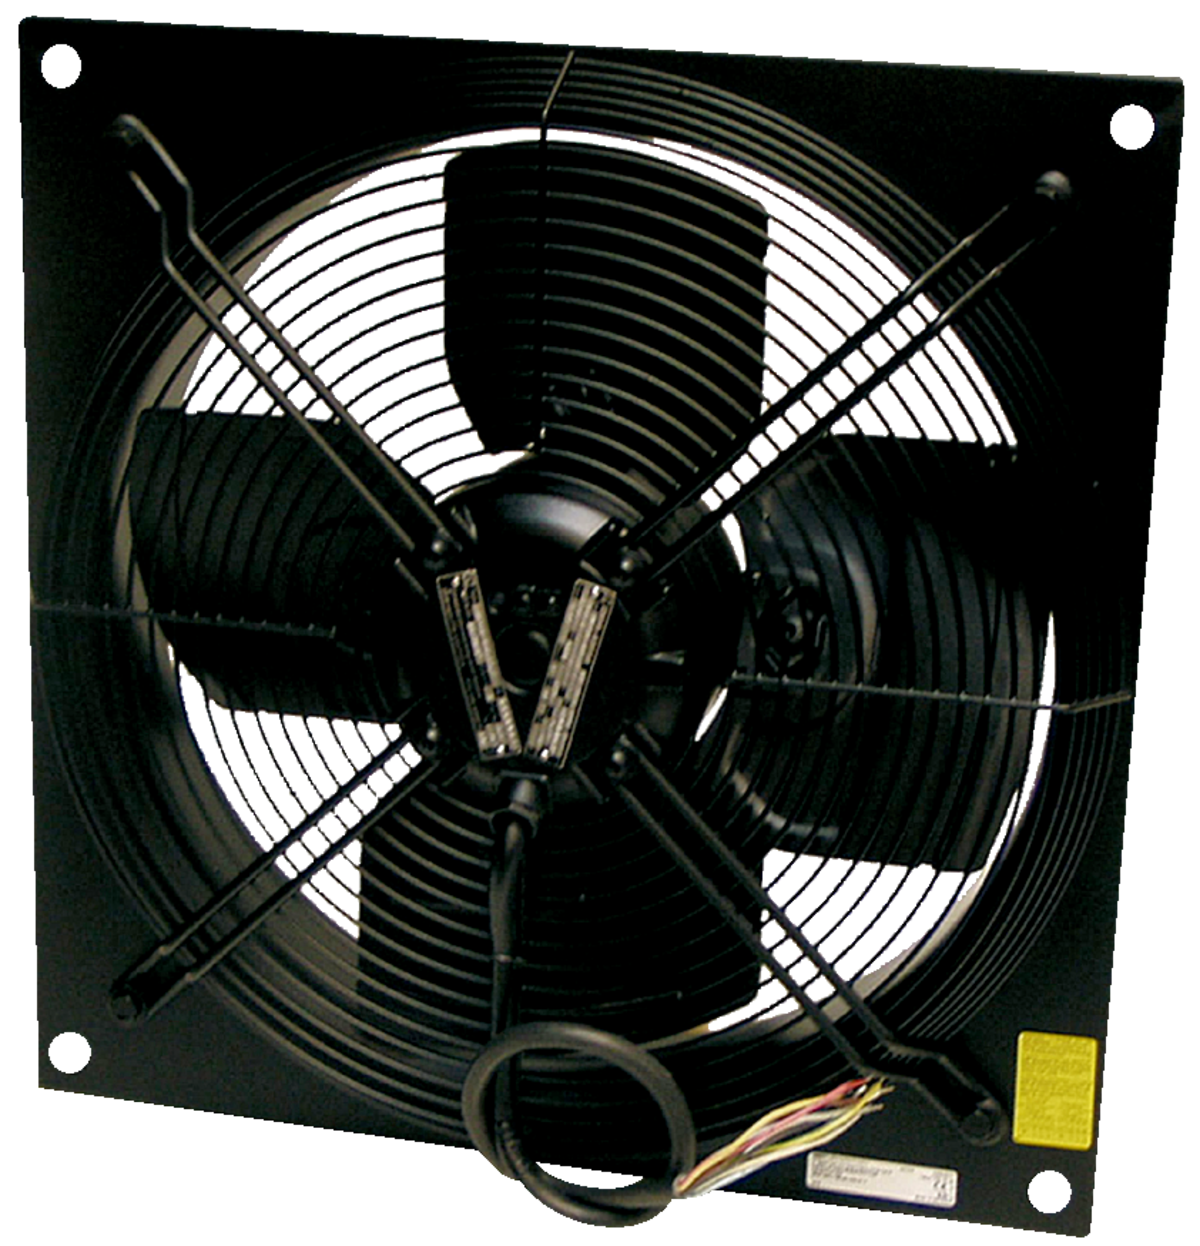 AW-EX - Aksijalni ventilatori - Ventilatori - Proizvodi - Systemair